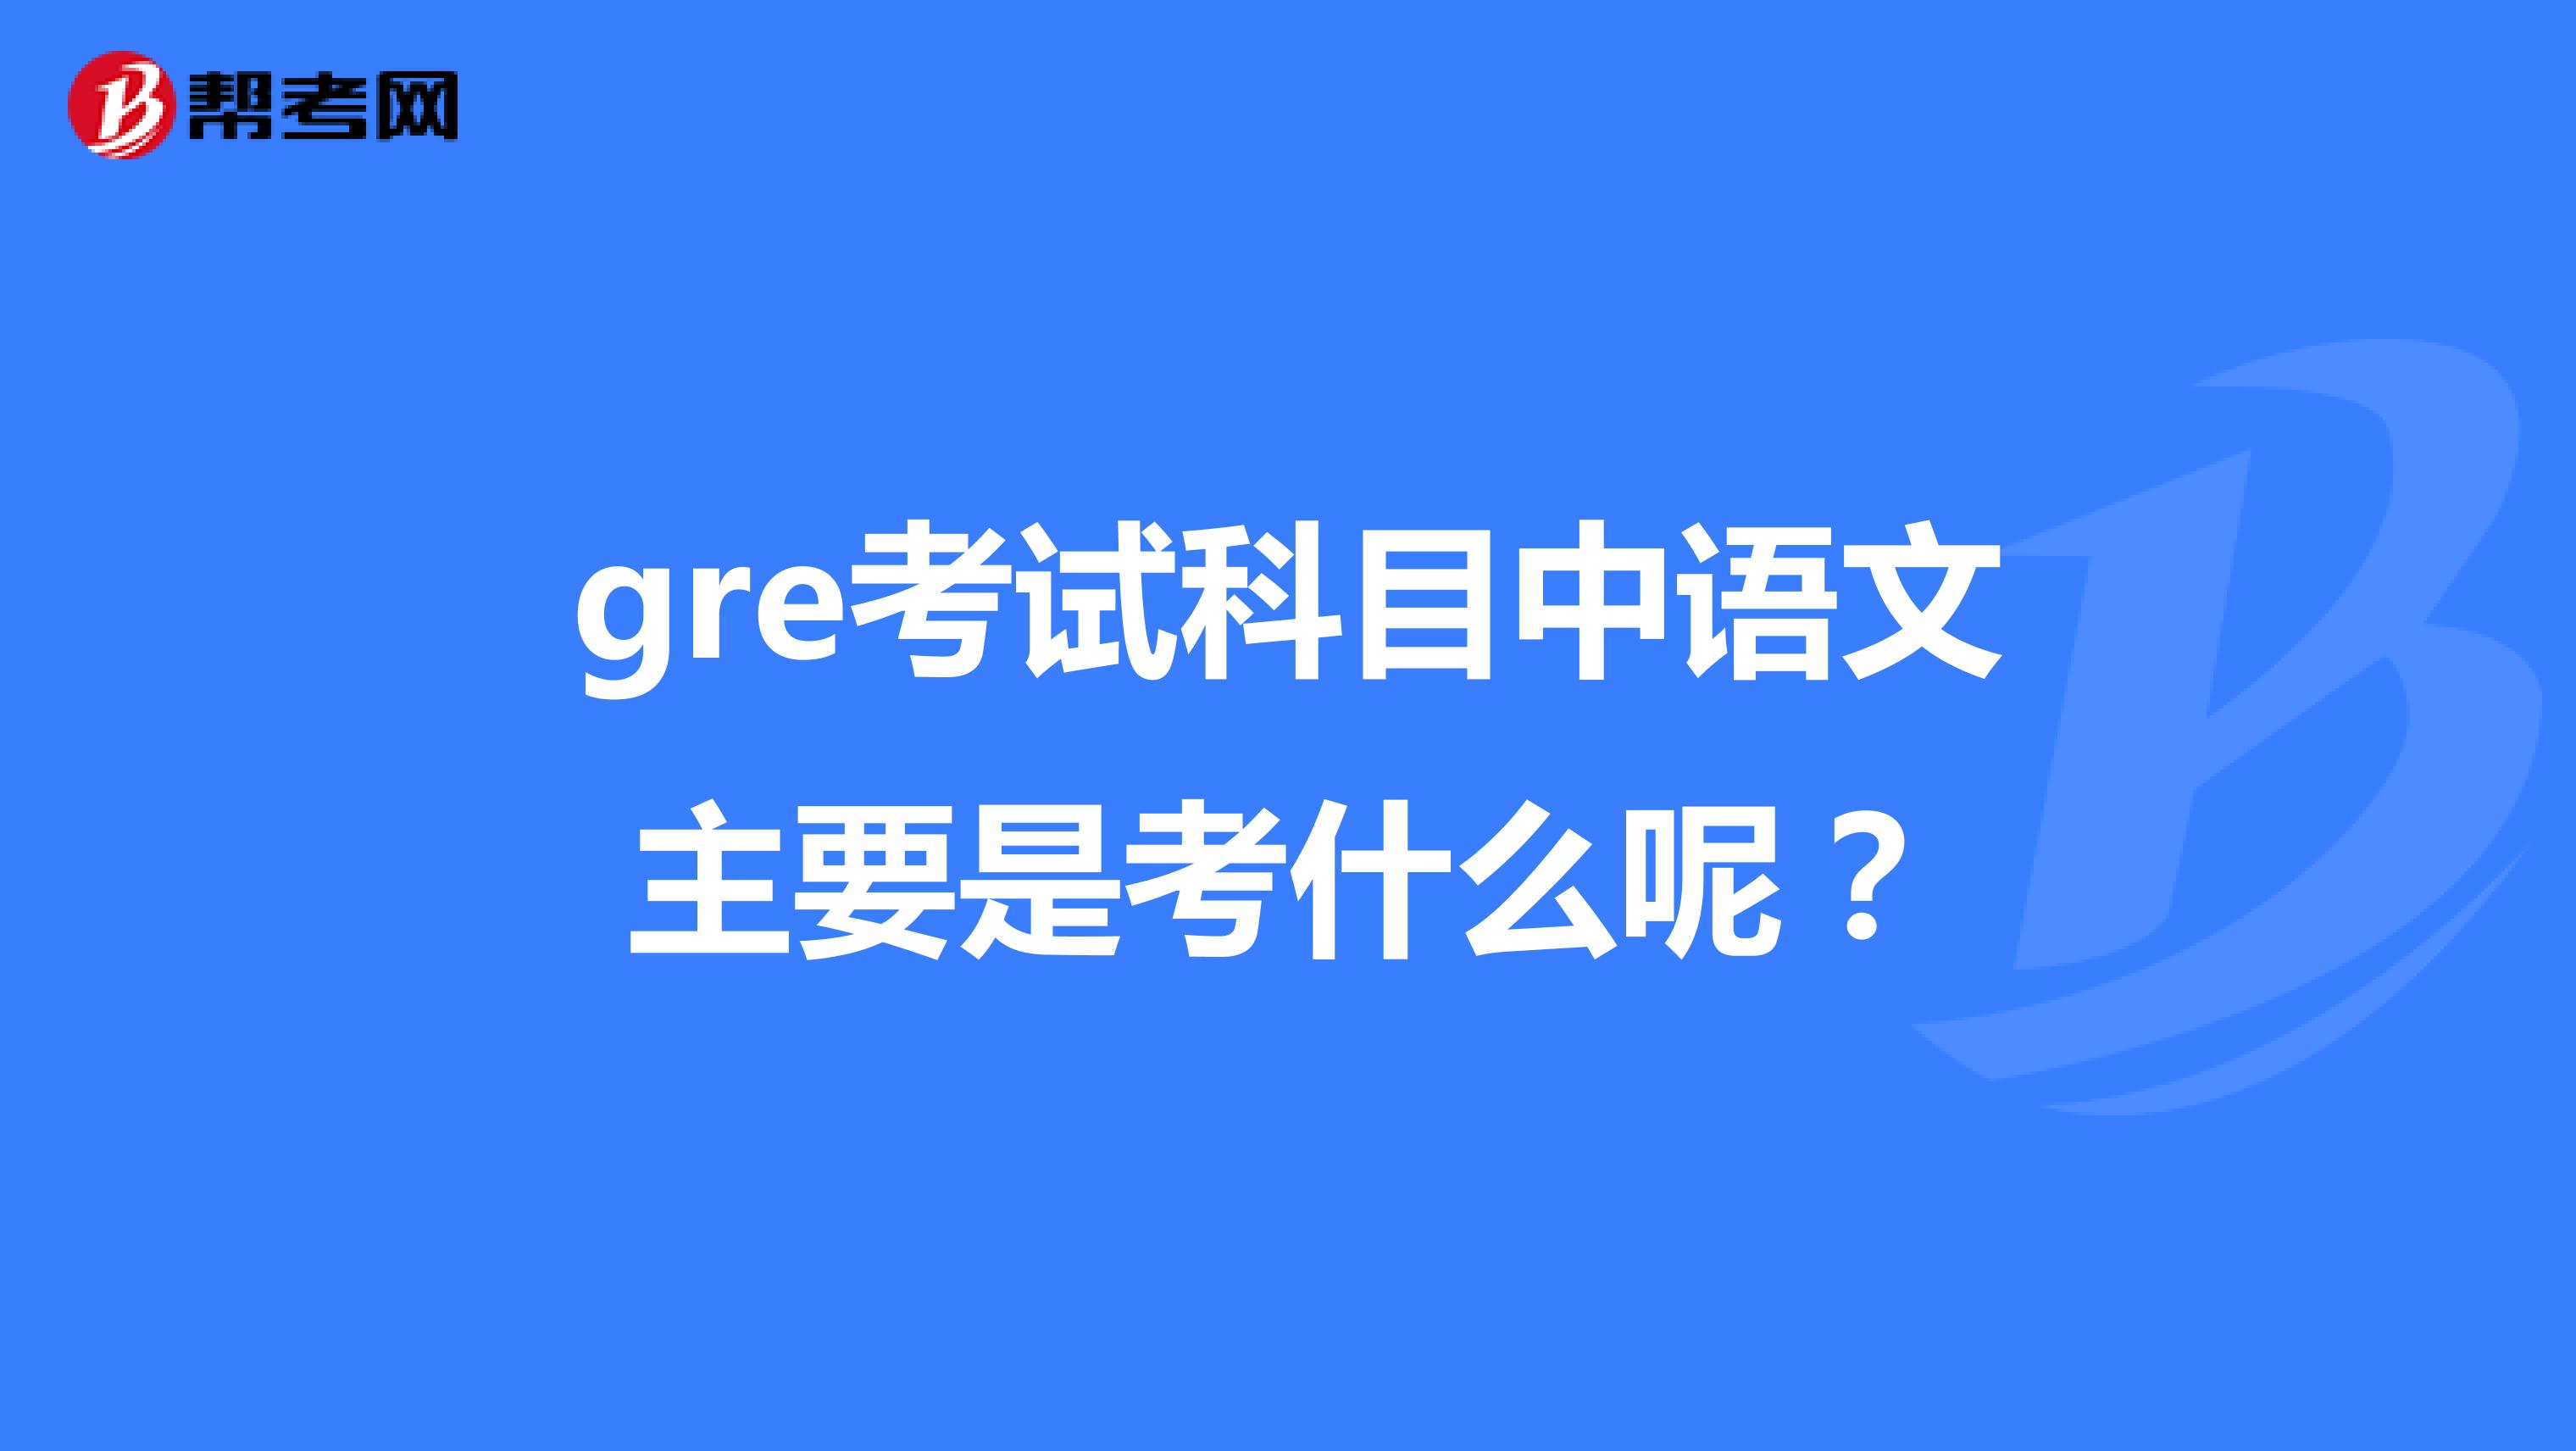 gre考试科目中语文主要是考什么呢？